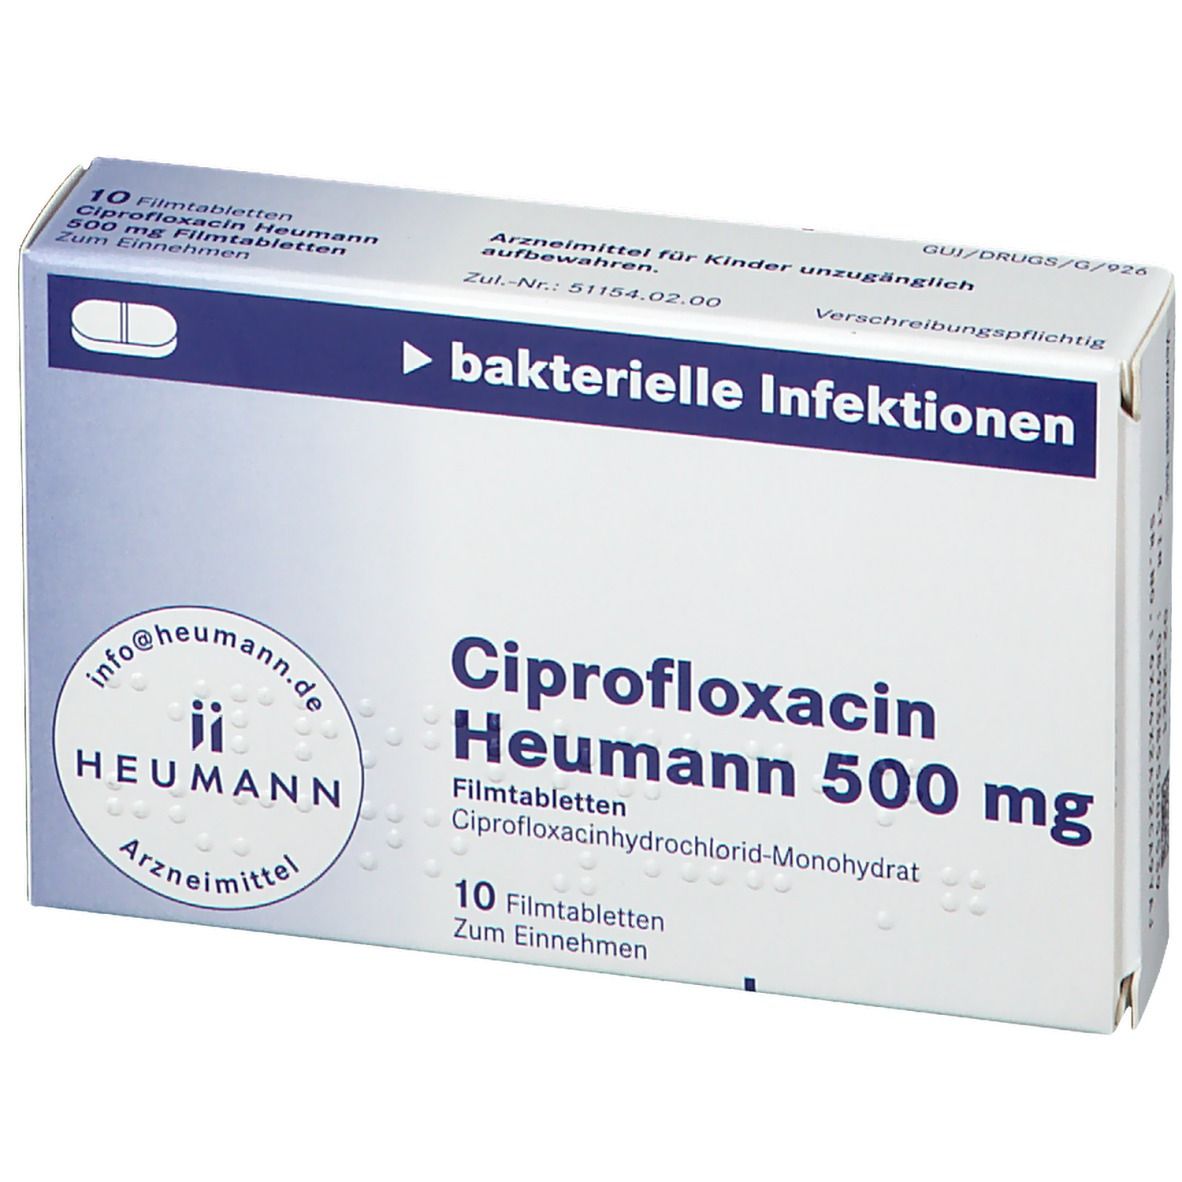 Ciprofloxacin Heumann 500 mg